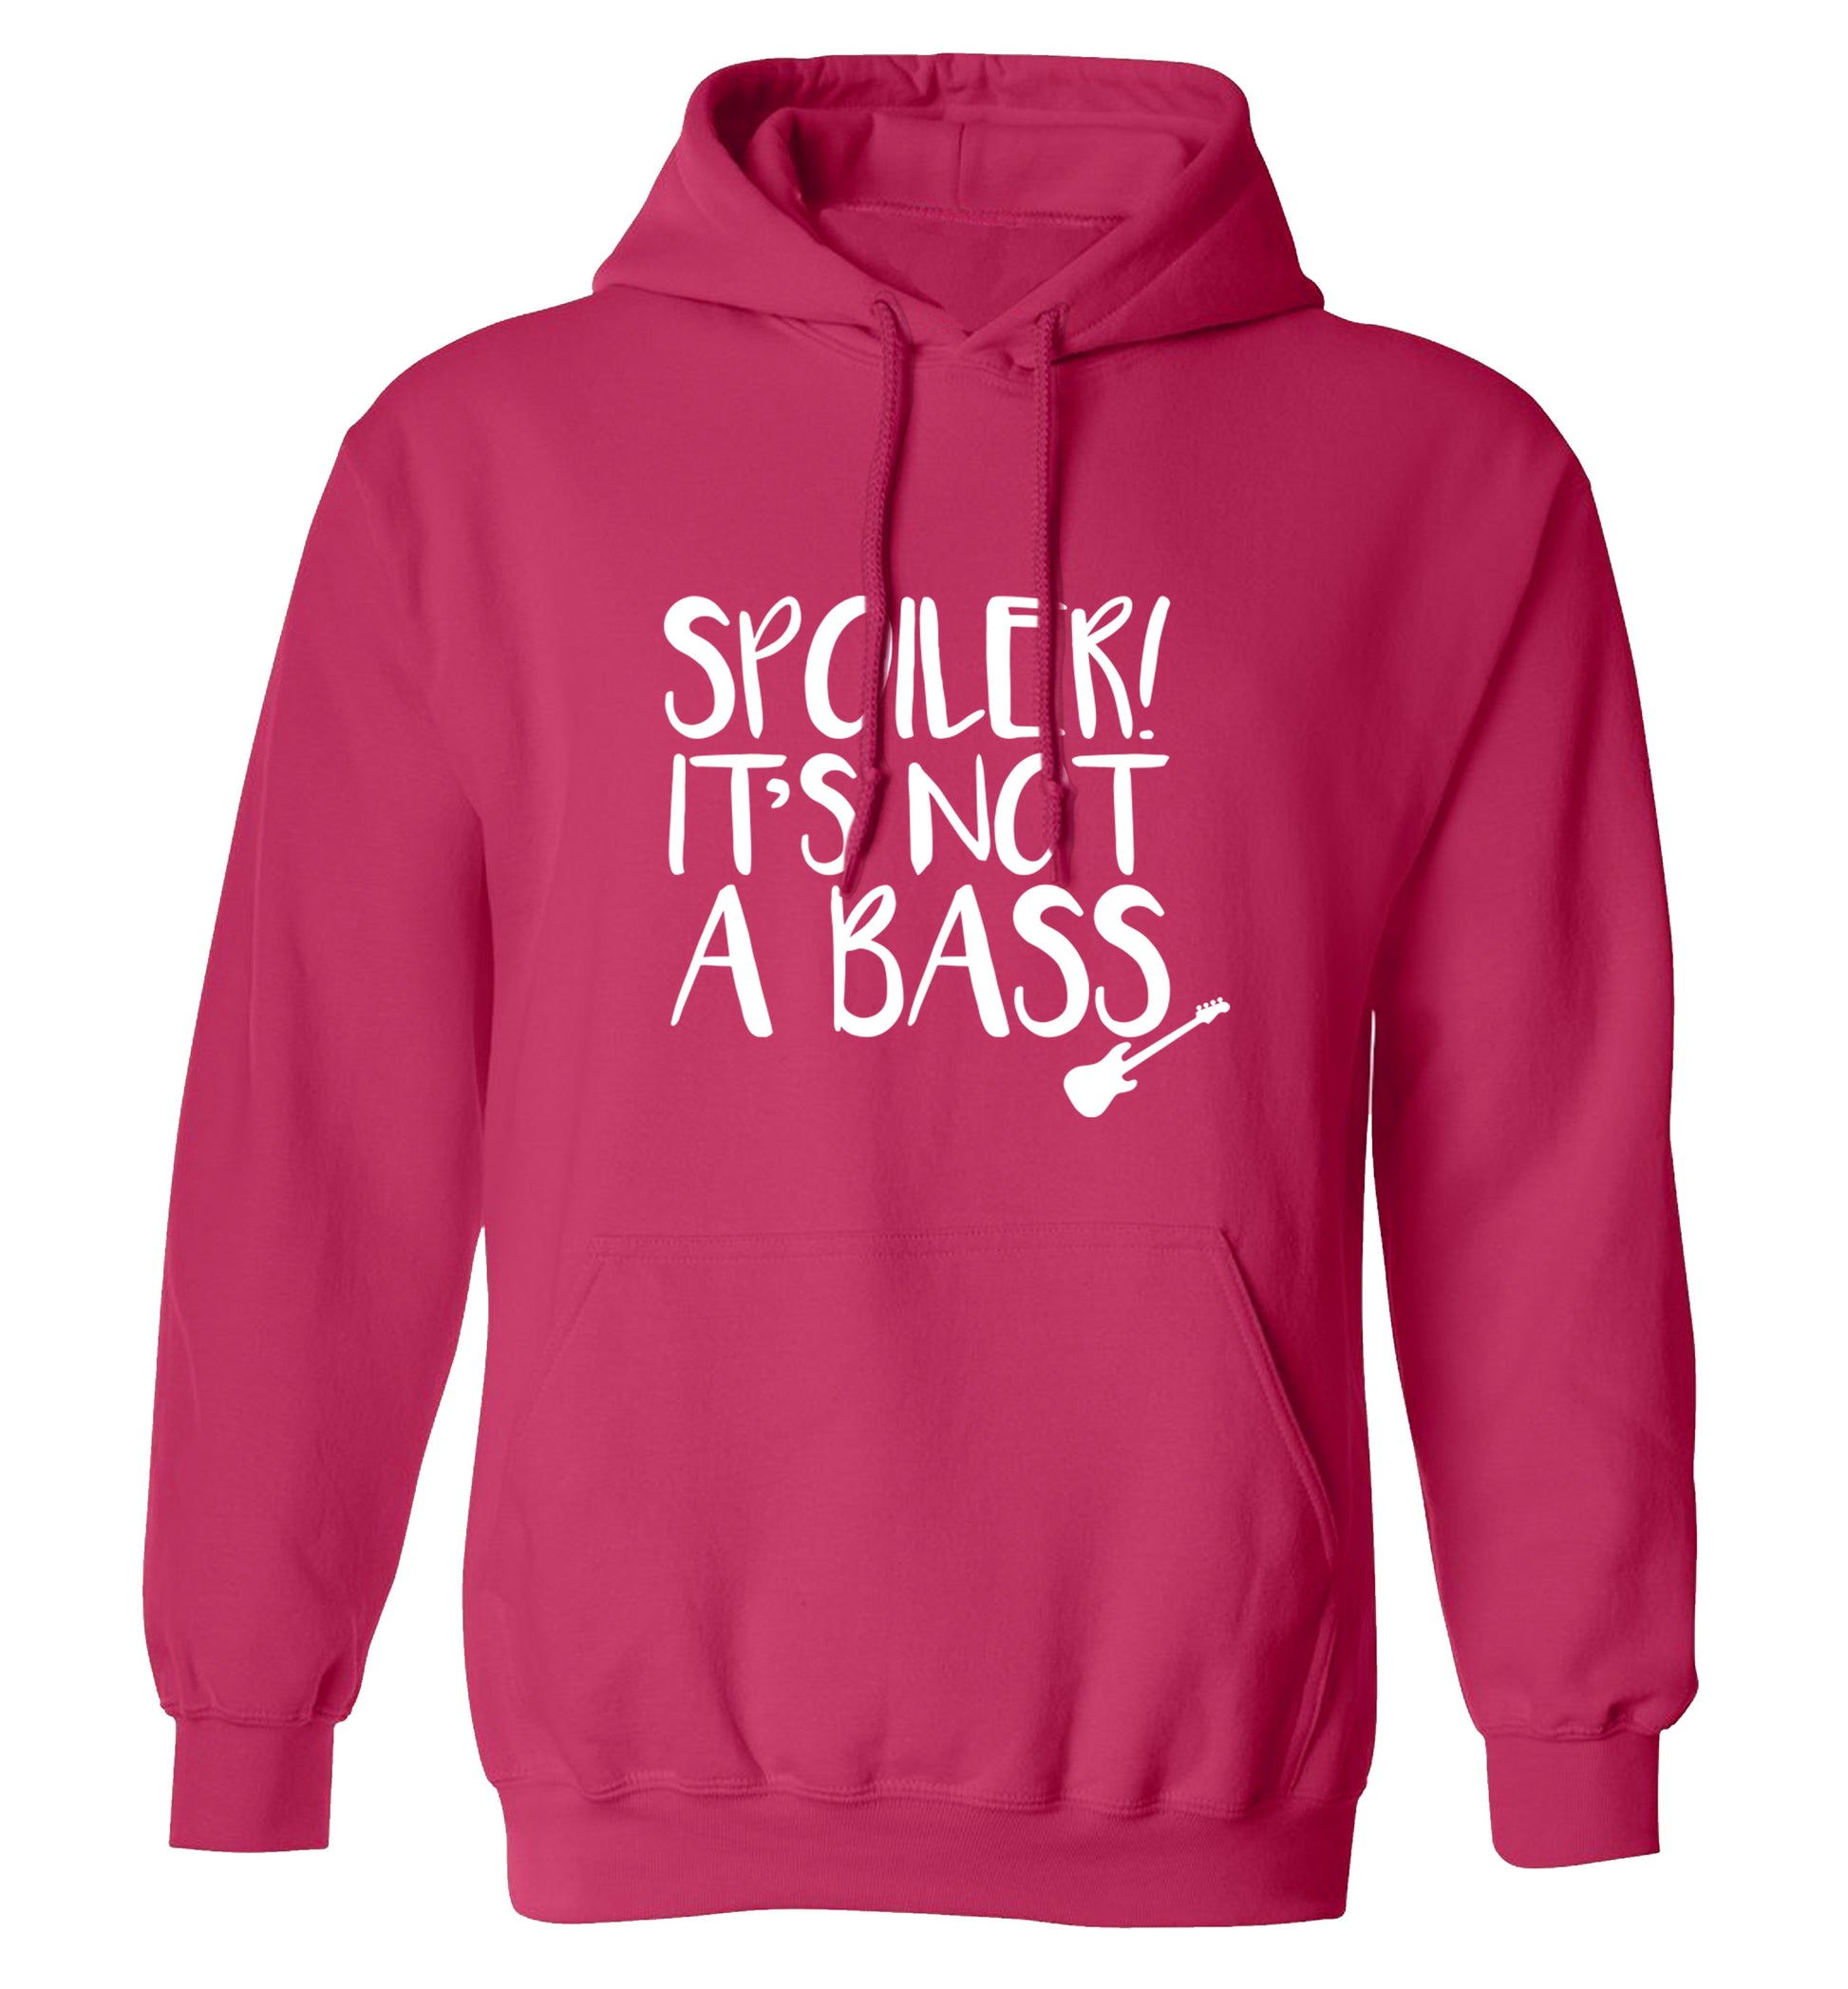 Spoiler it's not a bass adults unisex pink hoodie 2XL